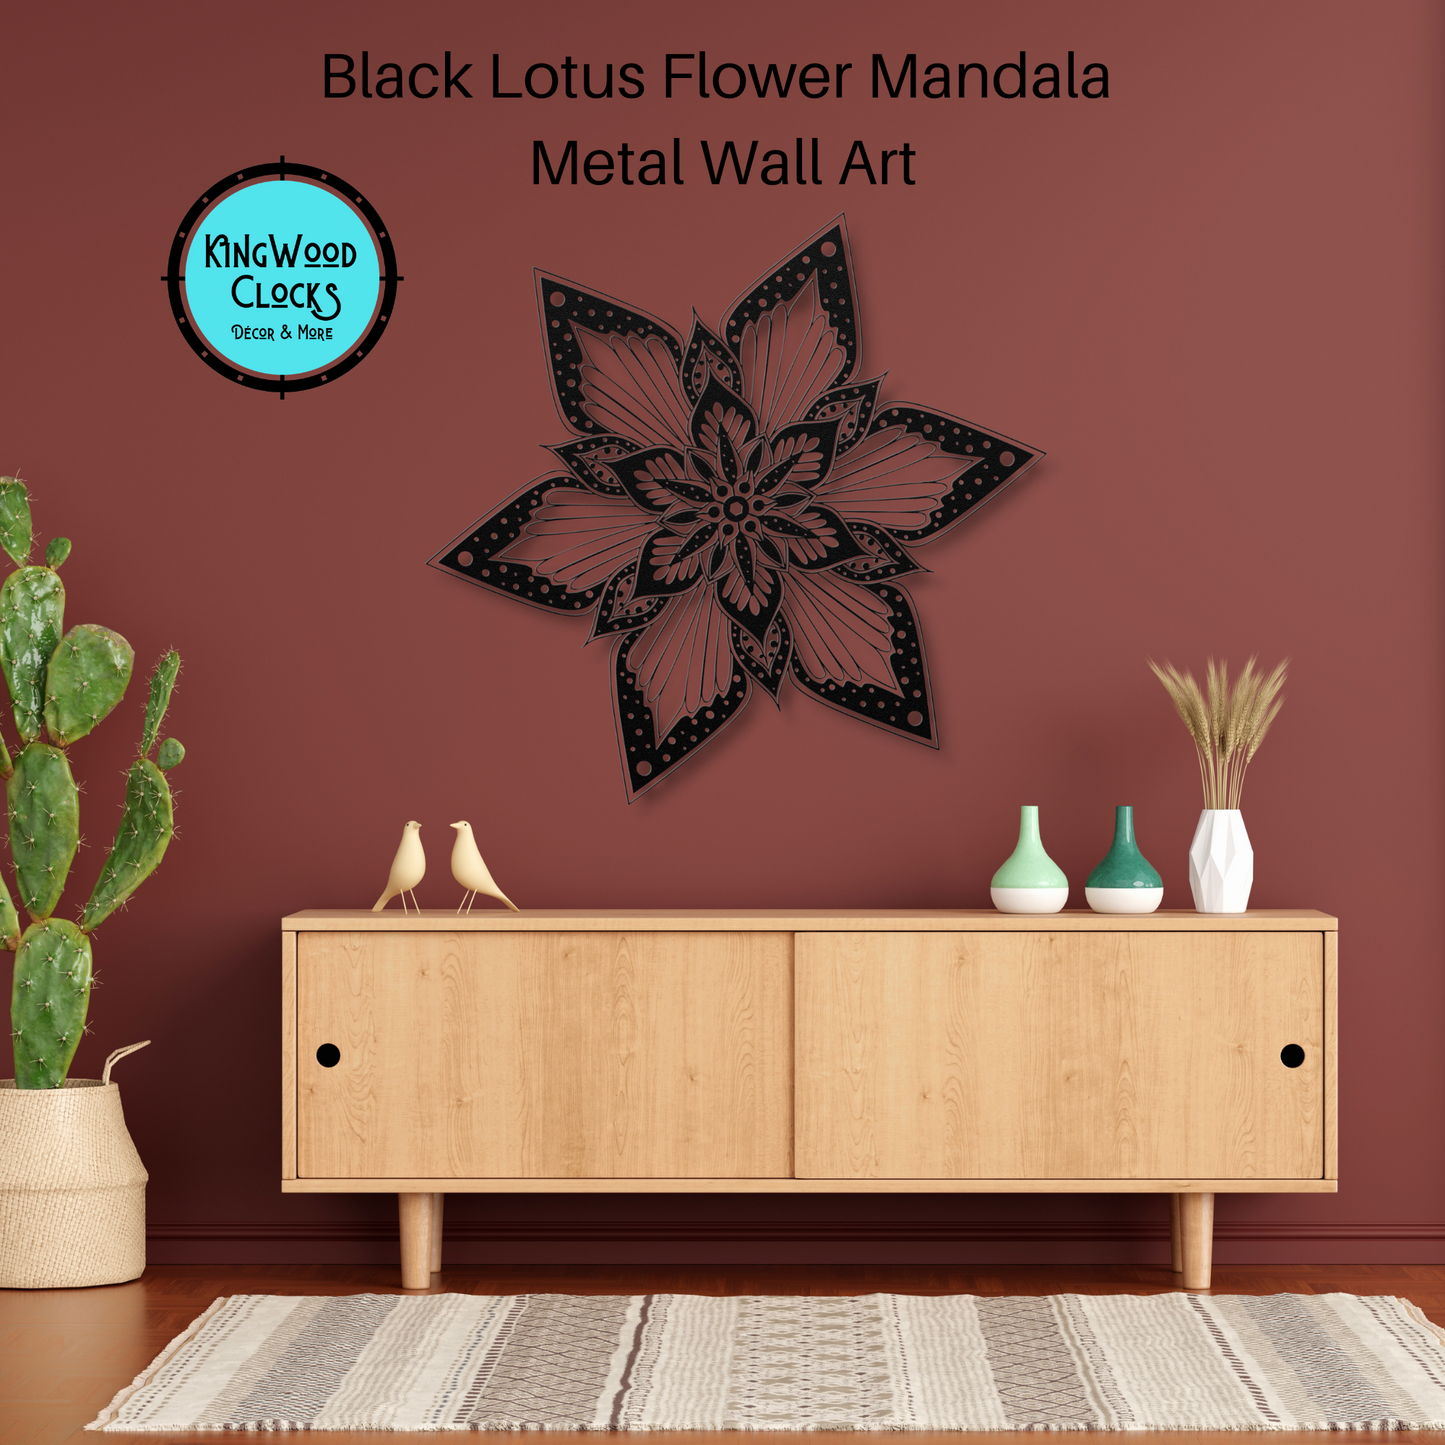 Starburst Flower Mandala Metal Wall Art